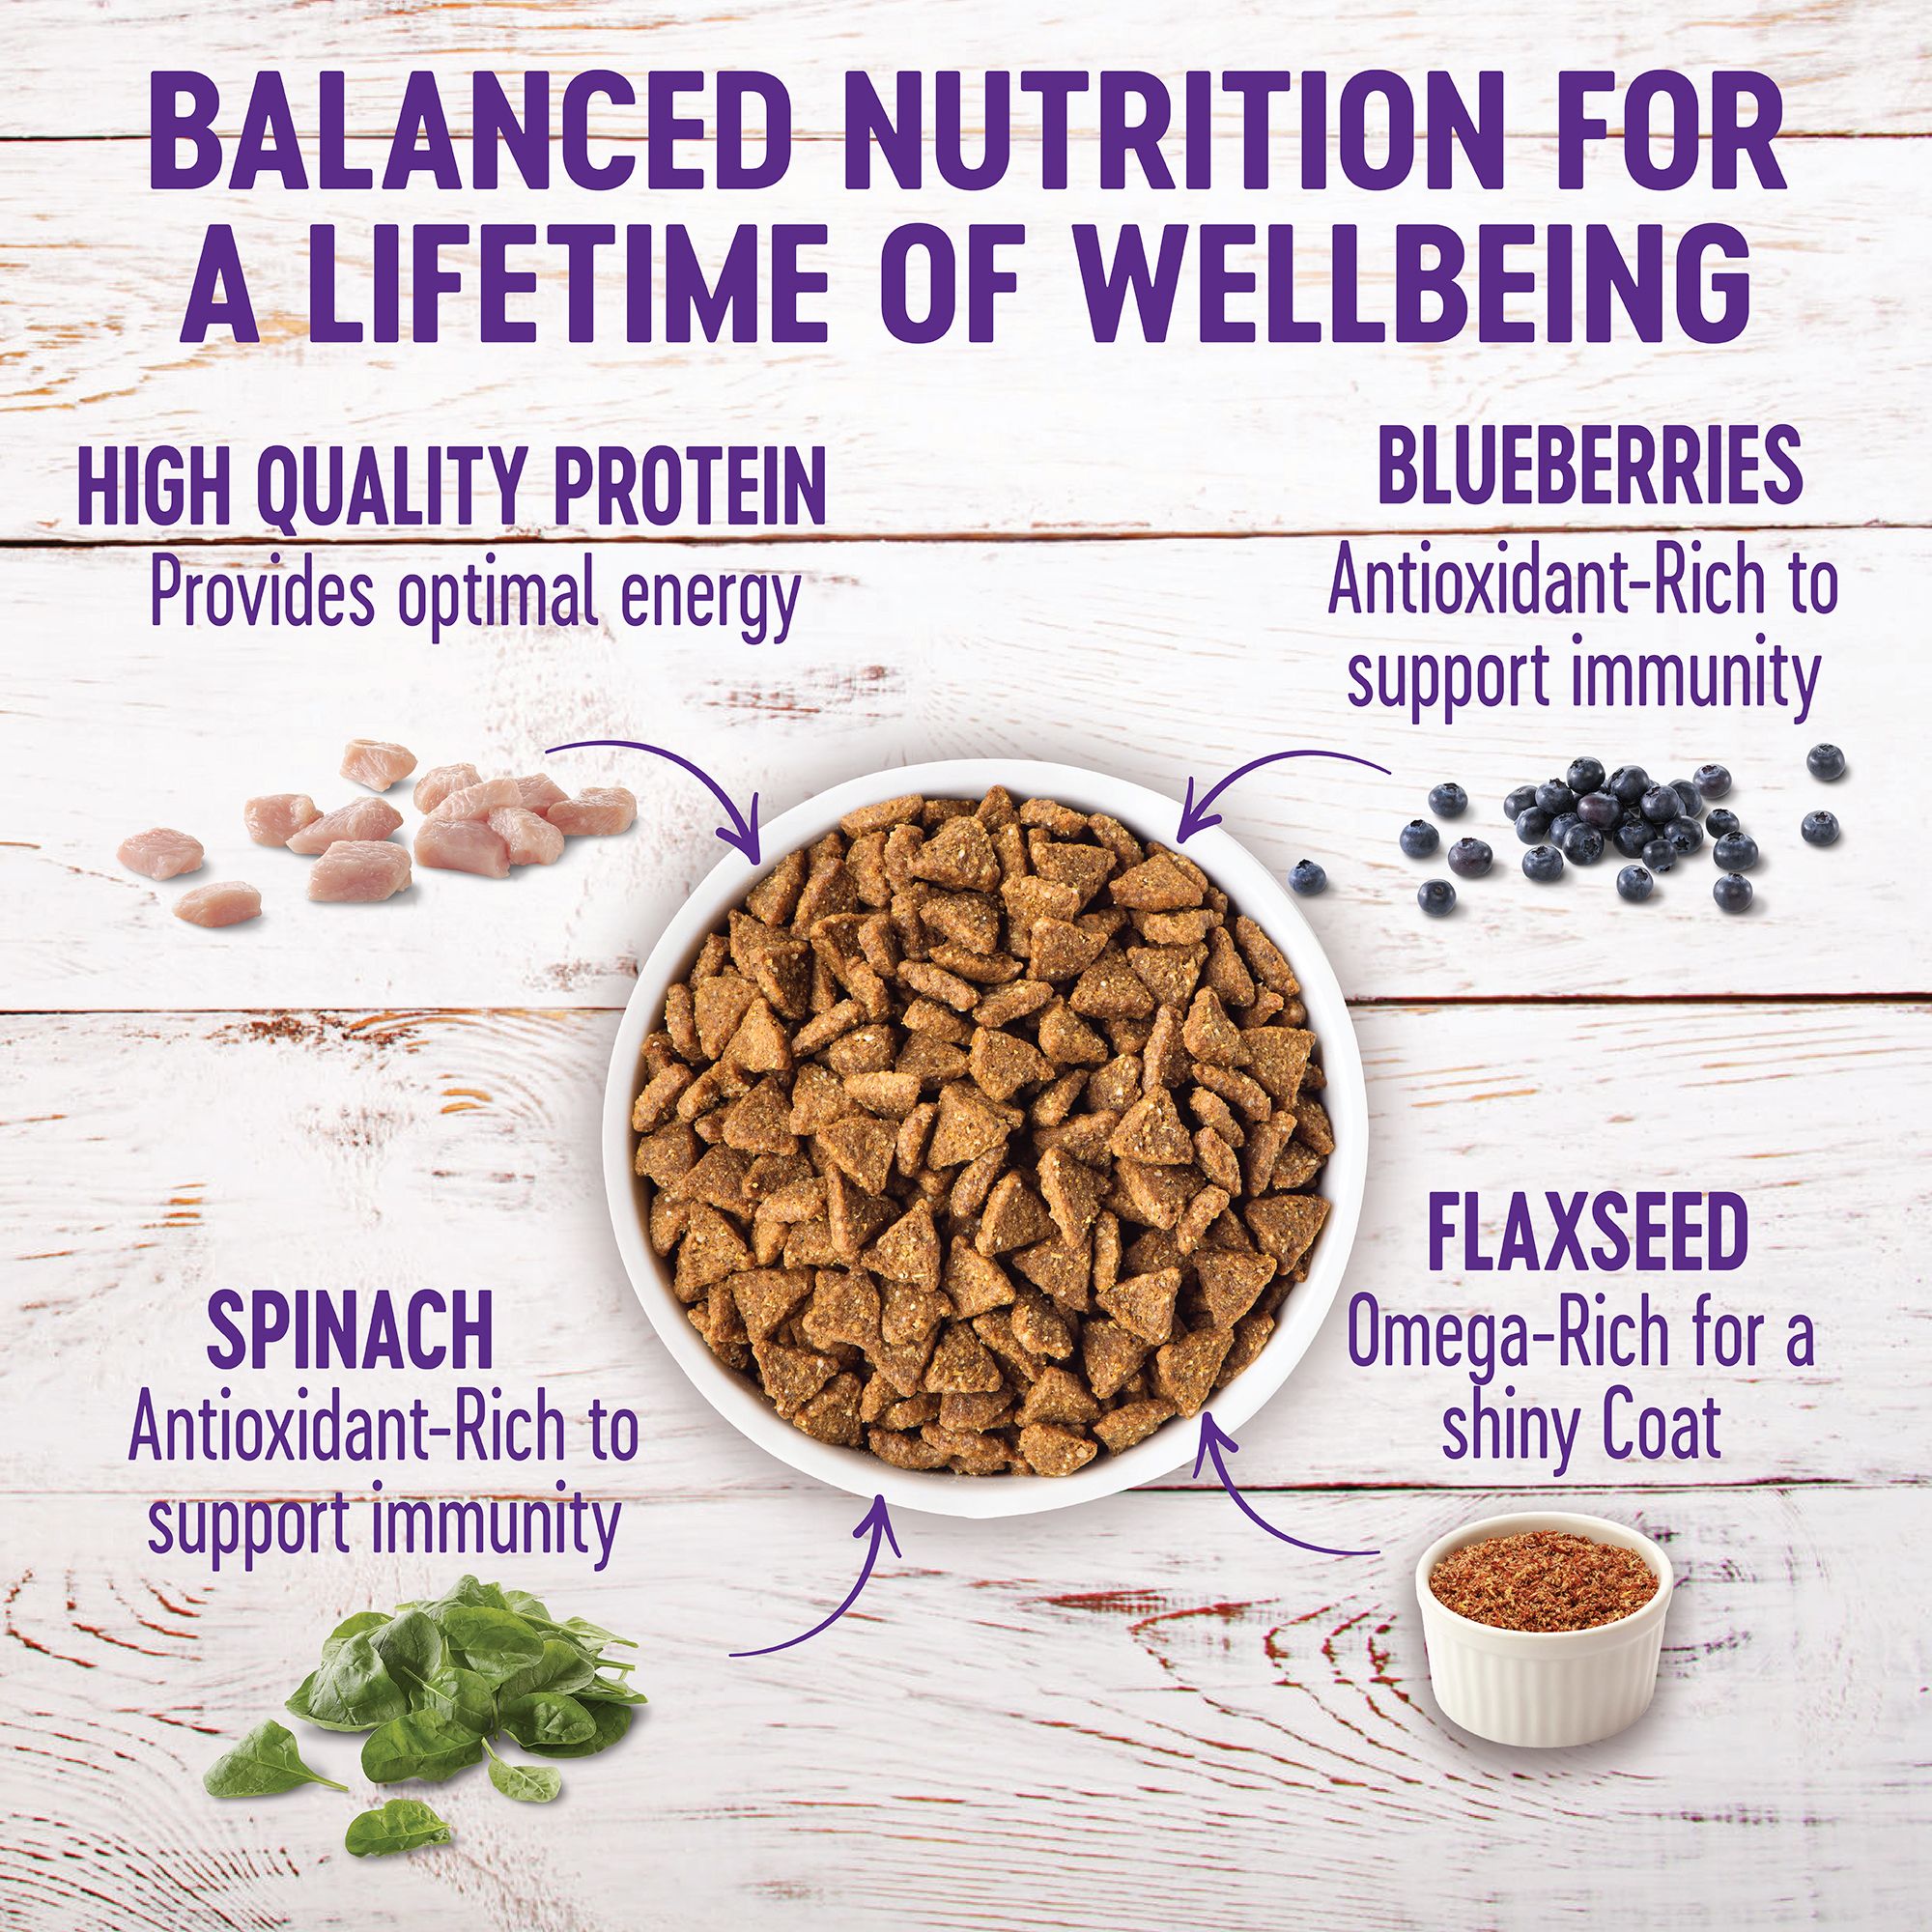 wellness grain free small breed dog food